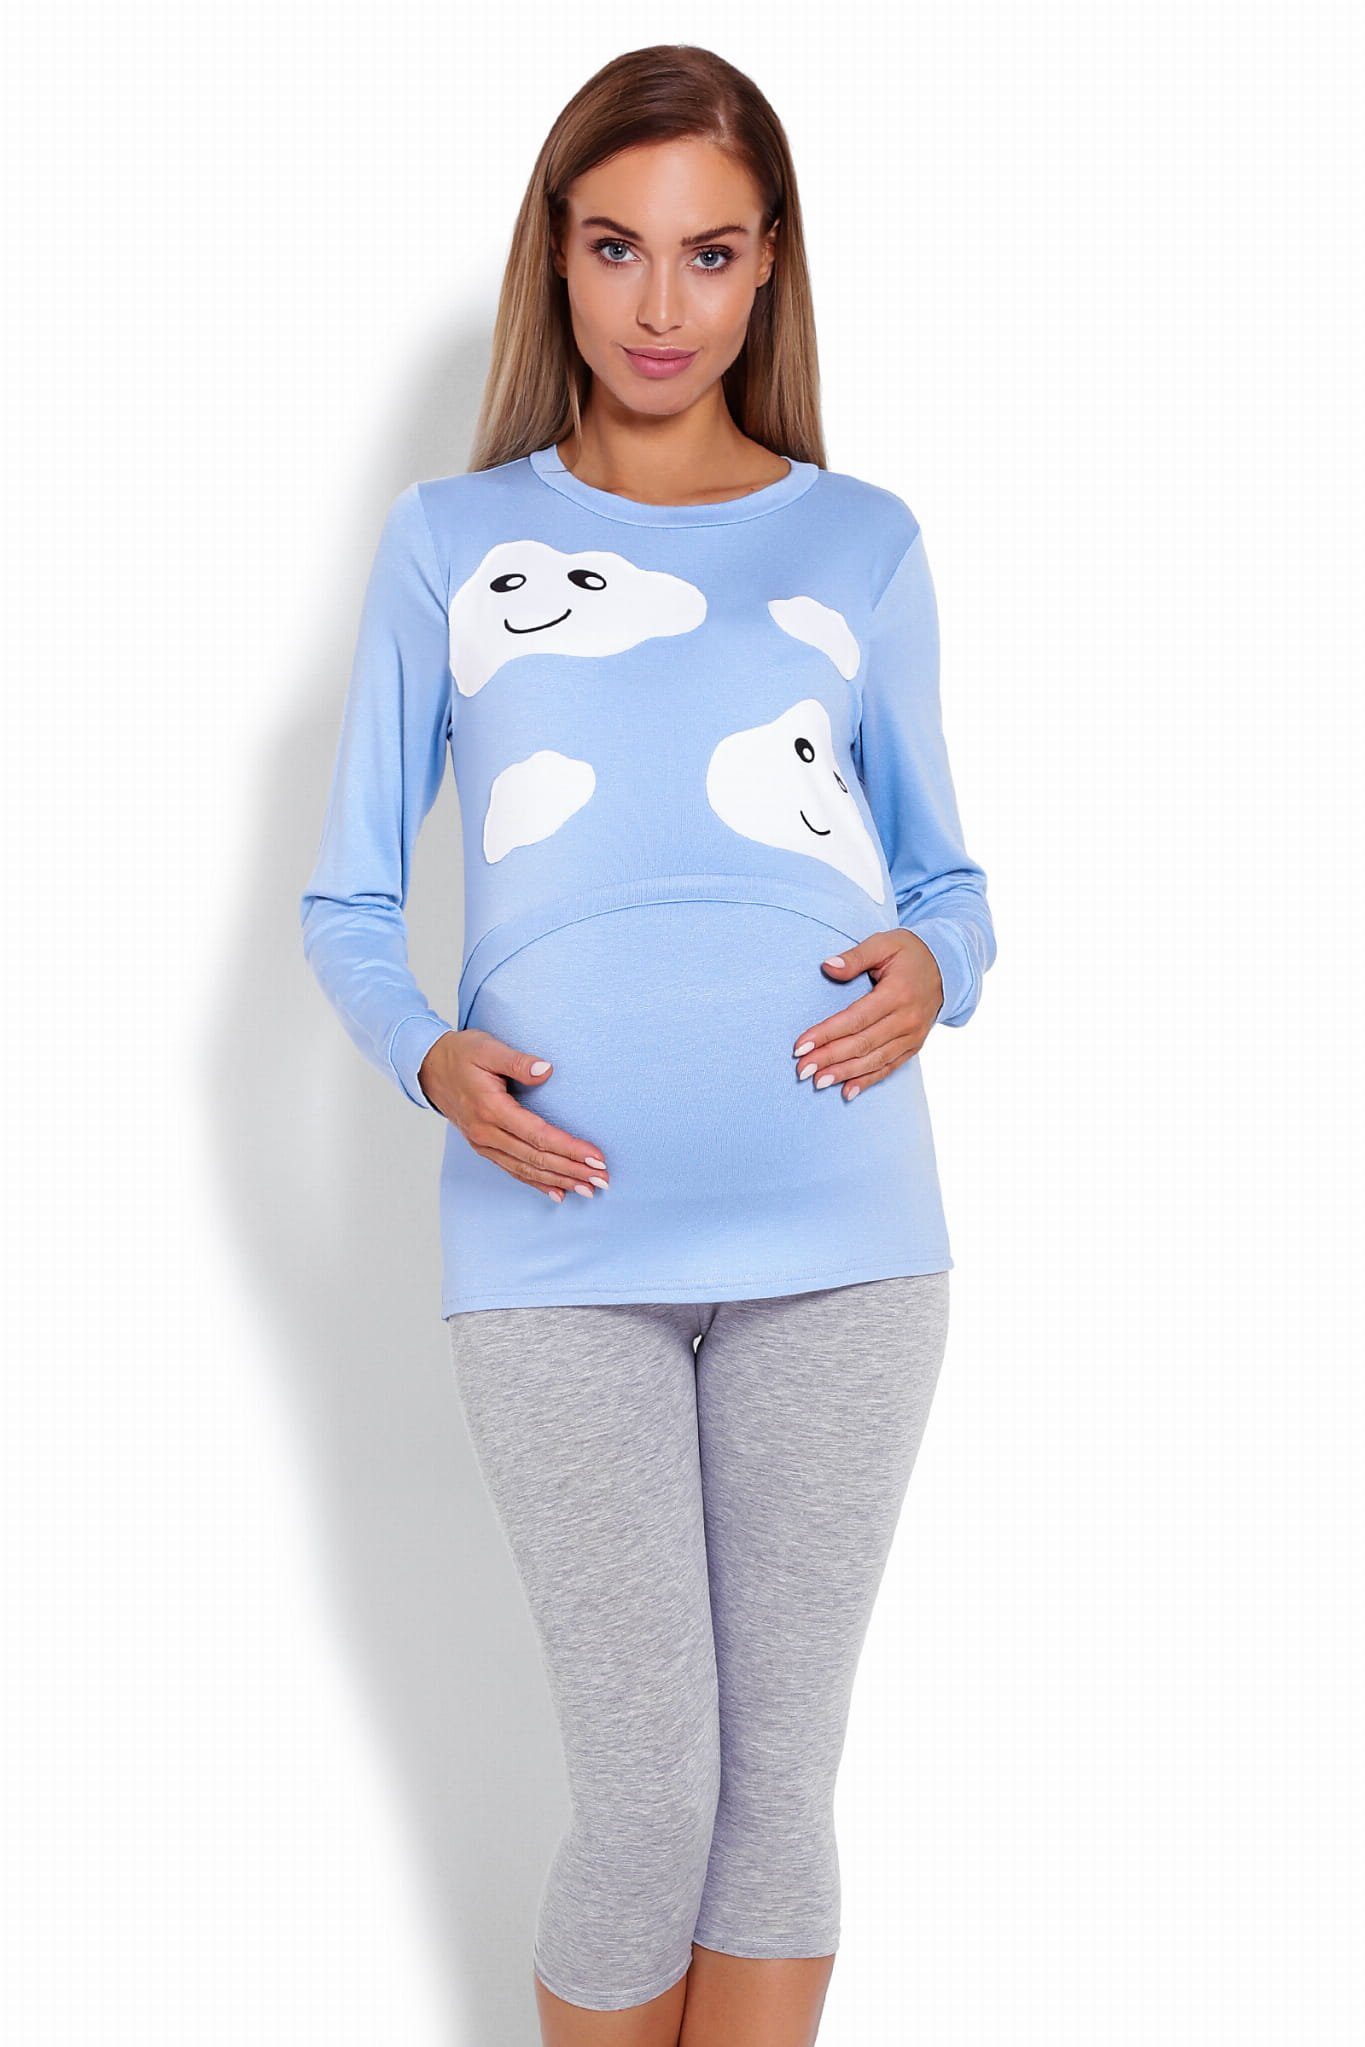 Schwangerschaft Schlafanzug Umstandspyjama PeeKaBoo blau/grau Stillen Stillschlafanzug